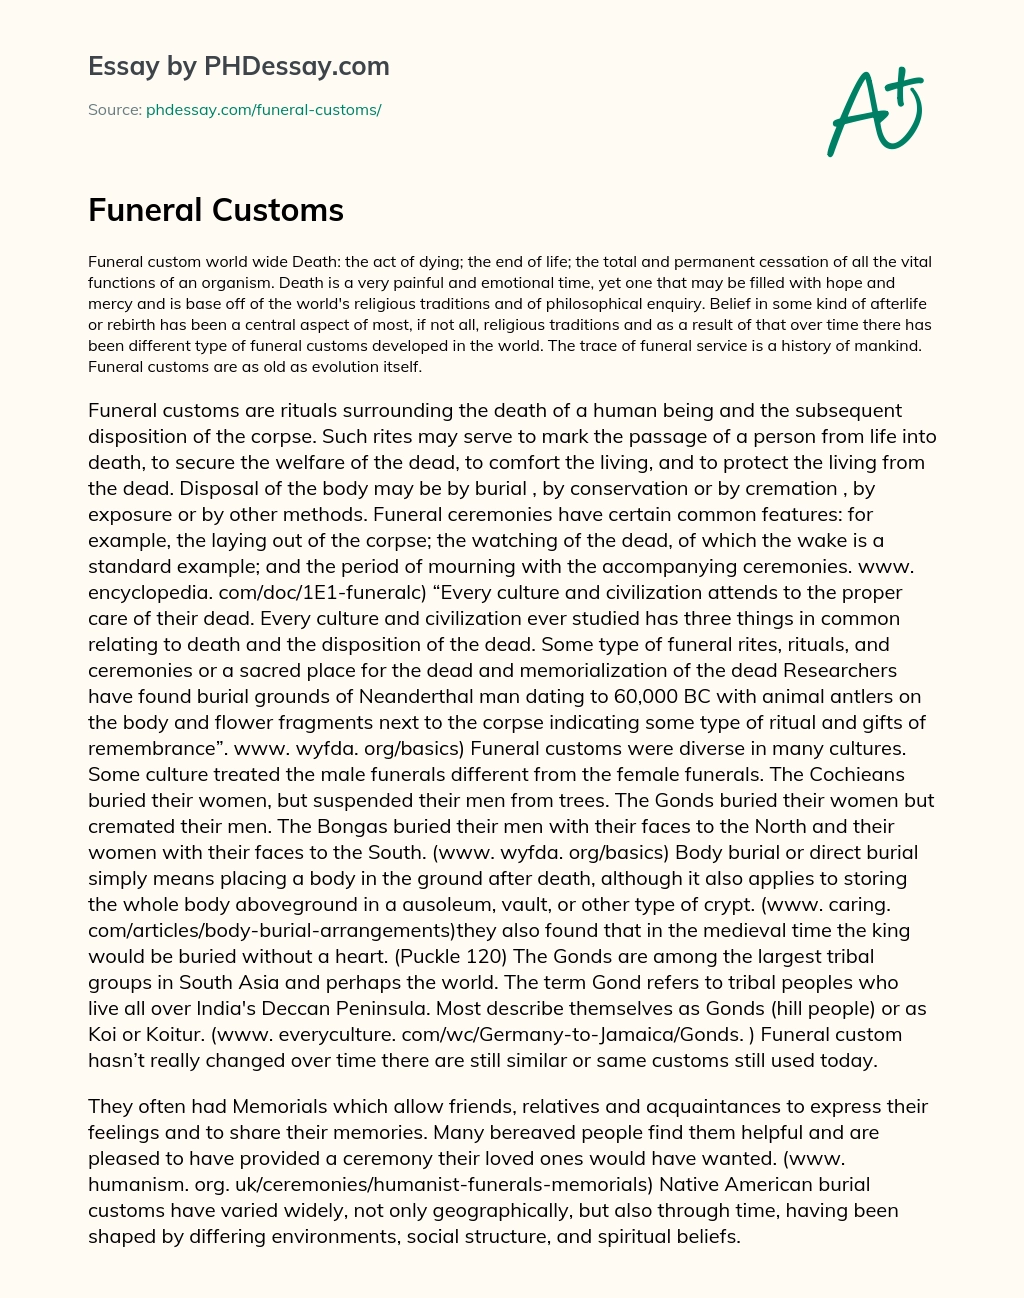 Funeral Customs essay